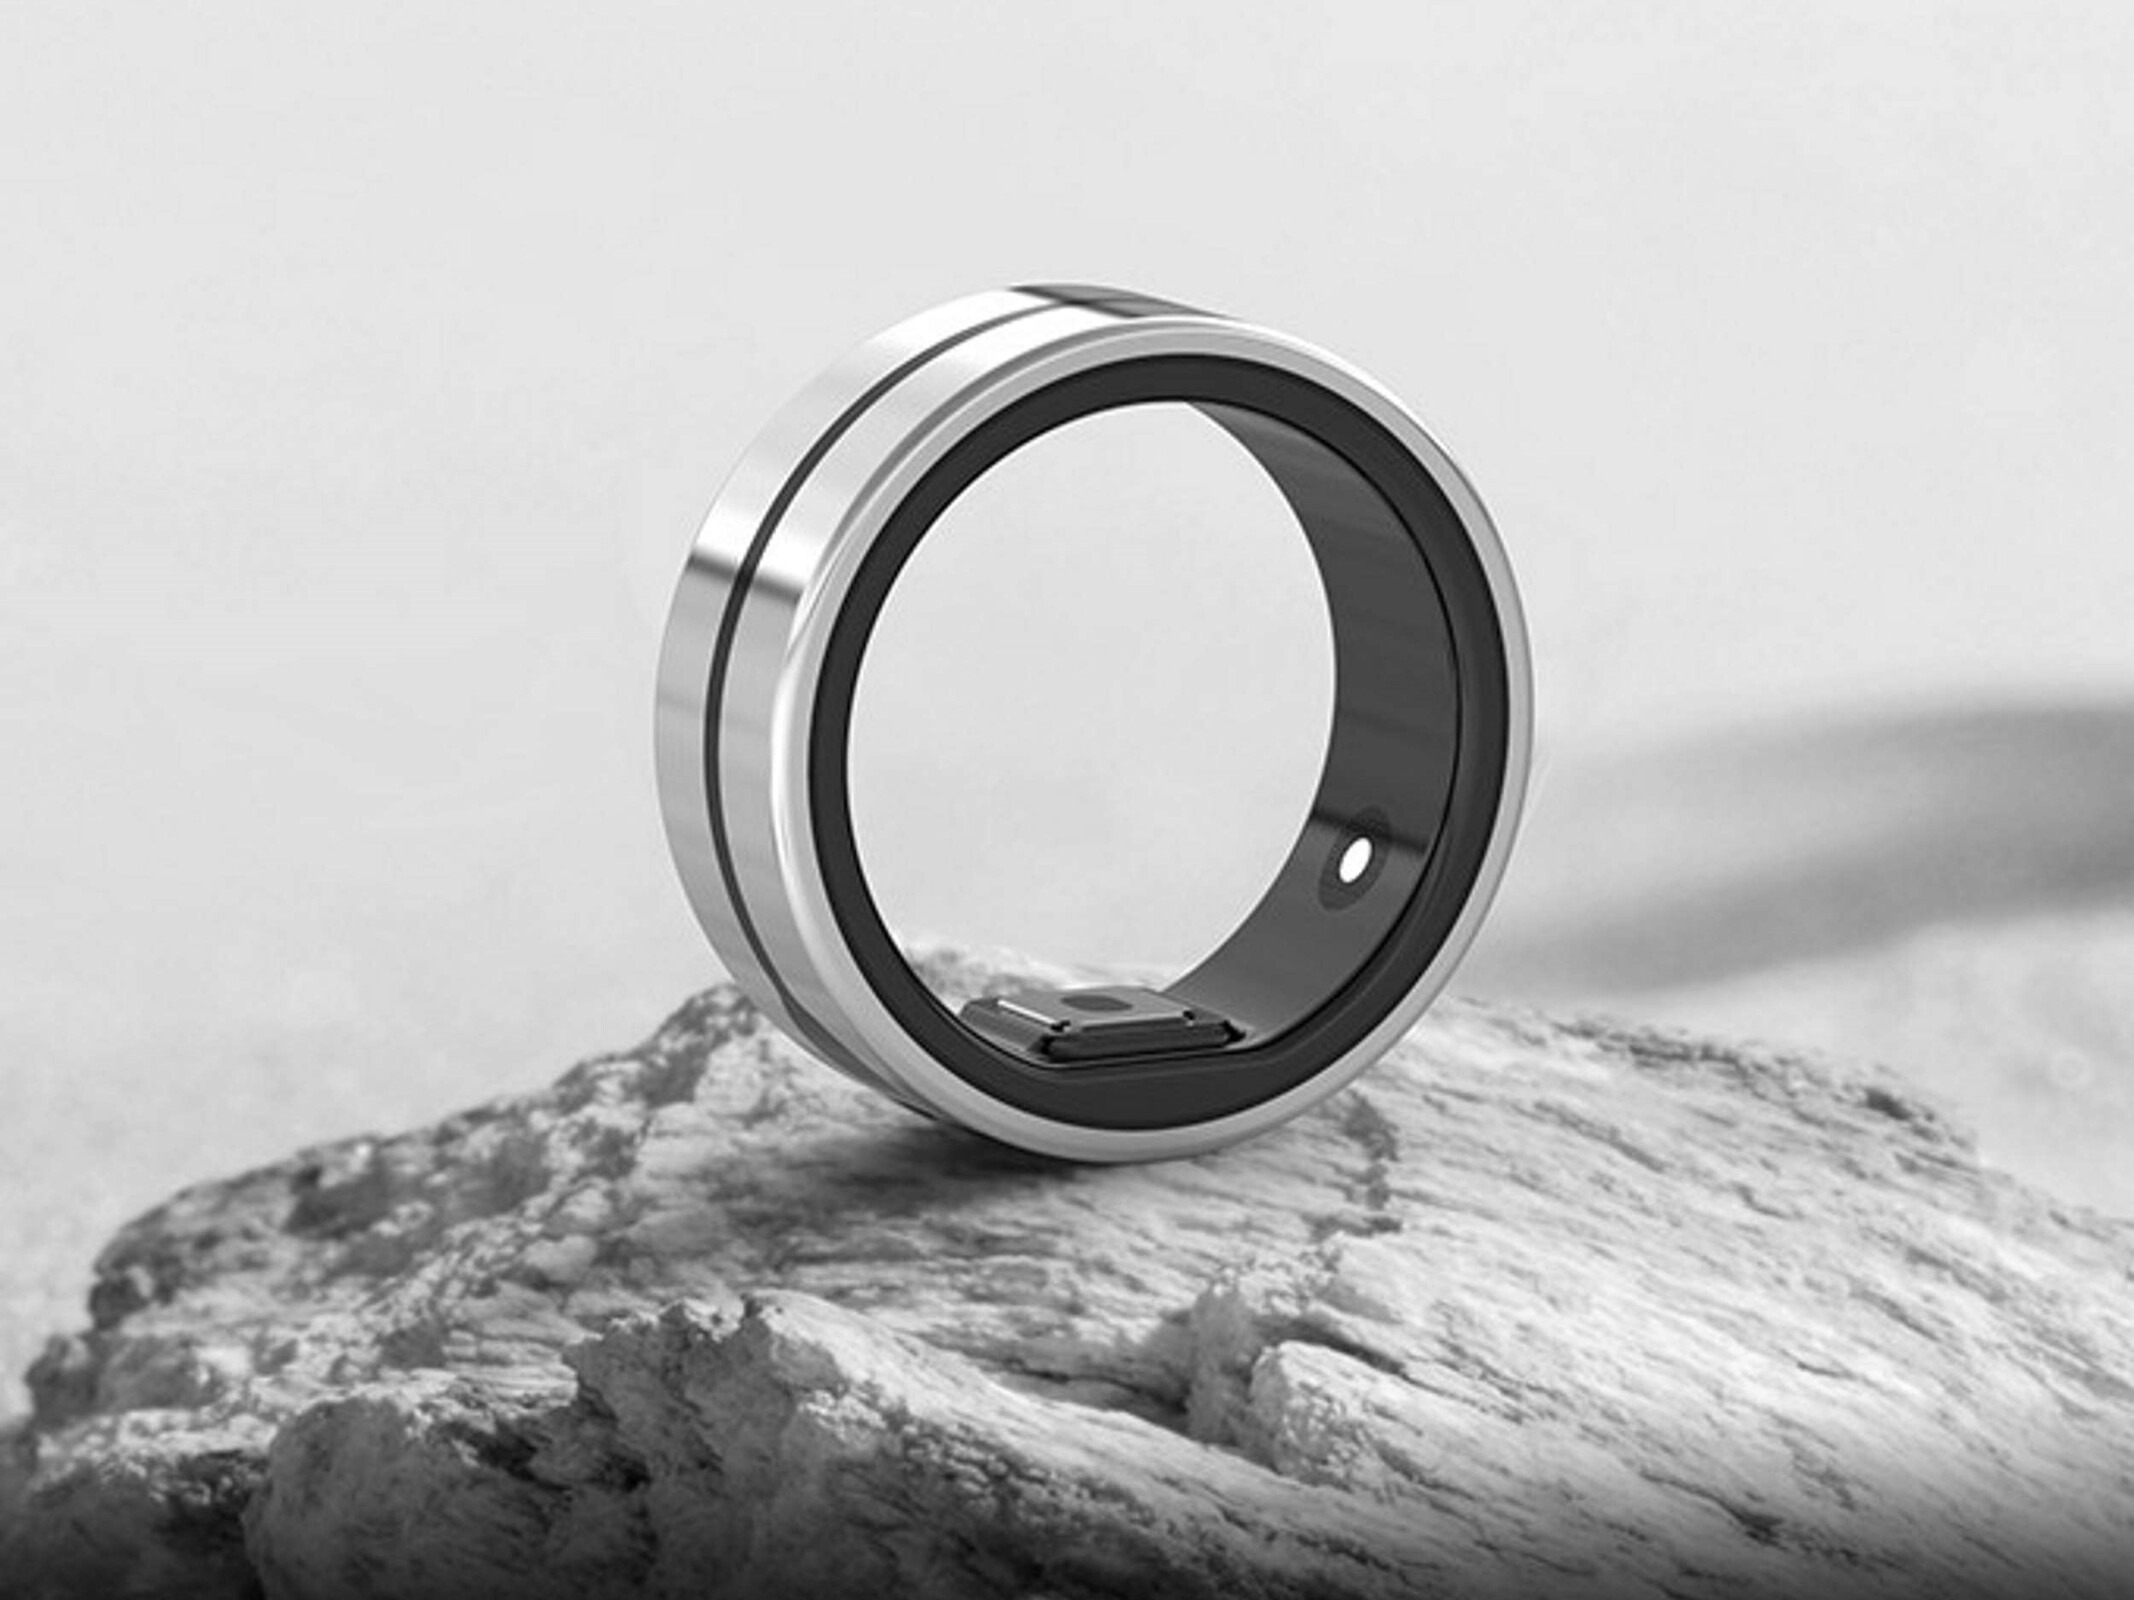 RINGO smart ring